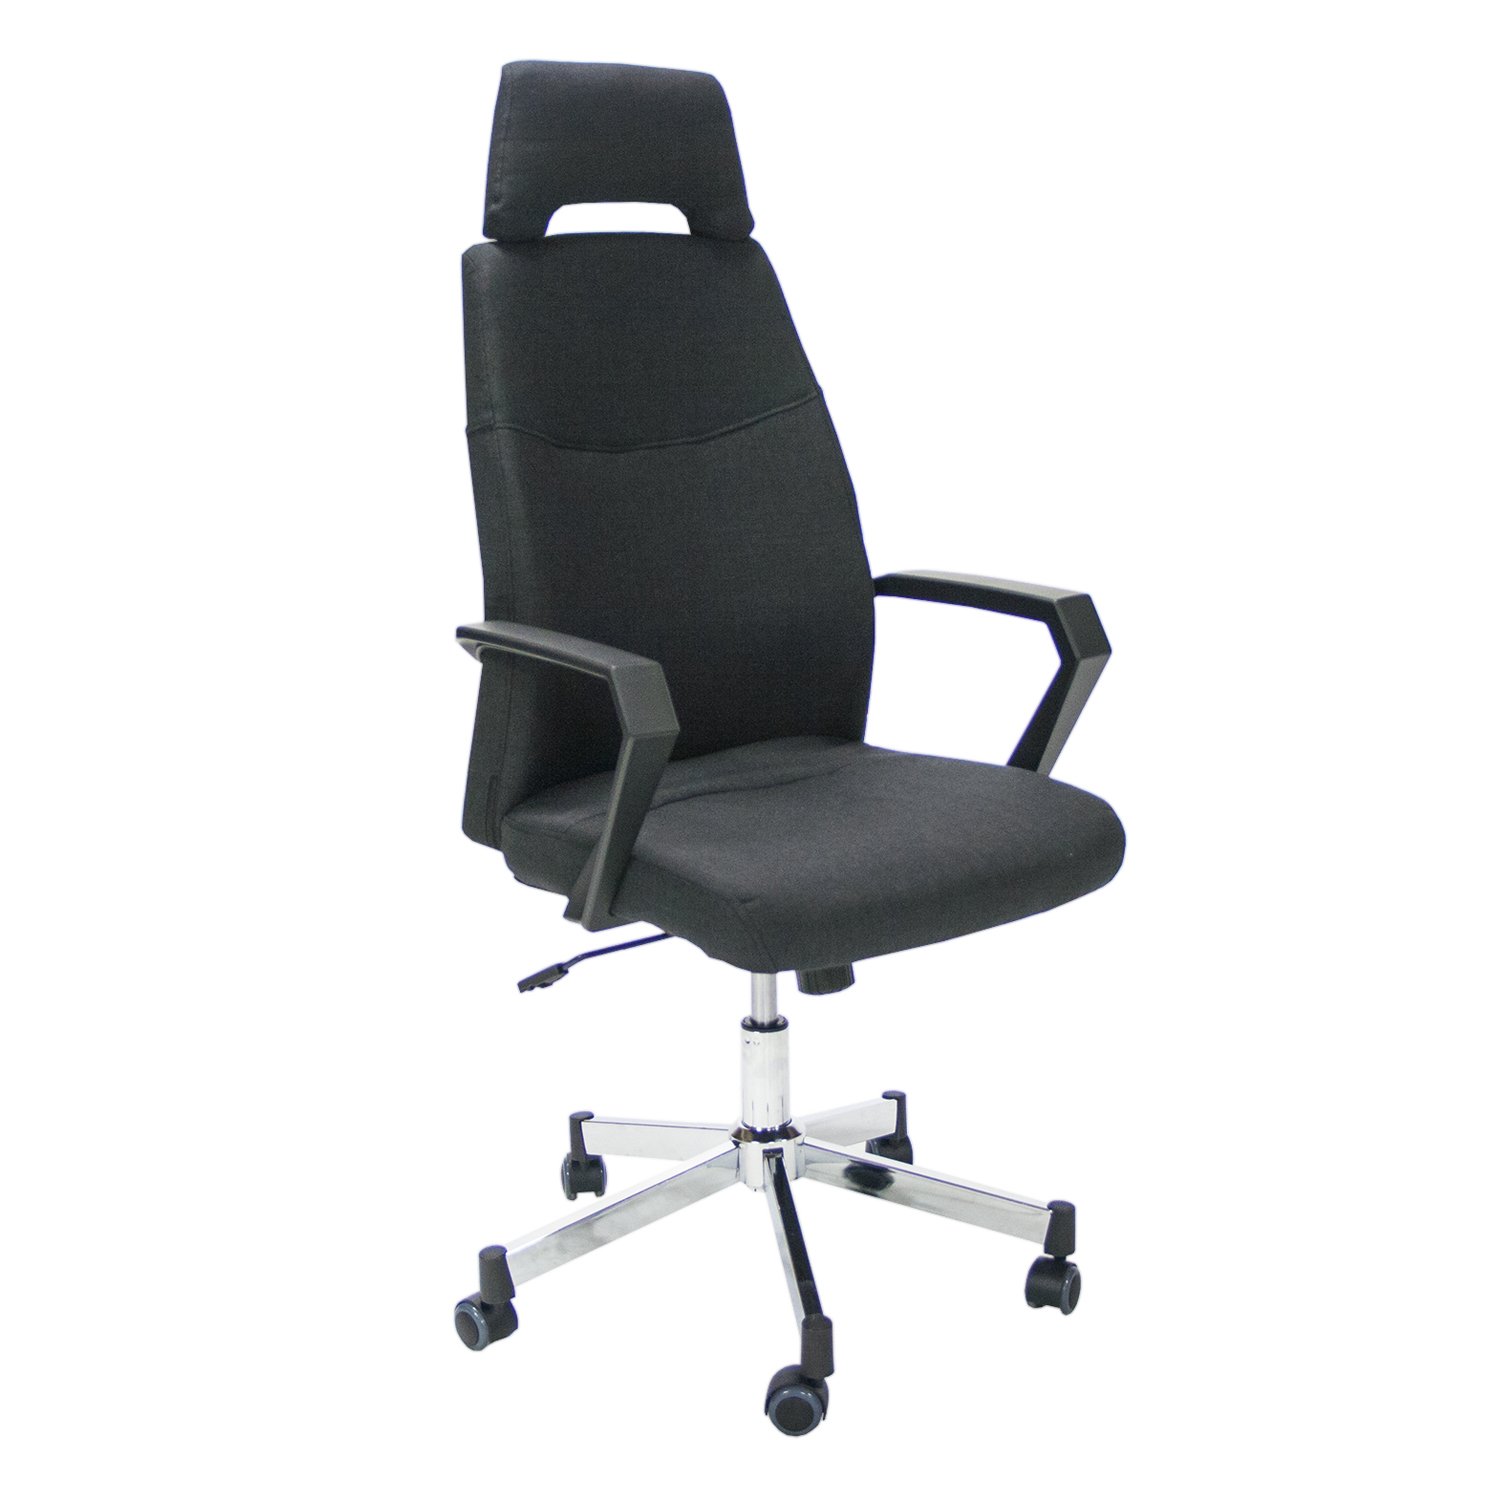 Biuro kėdė DOMINIC, 58x59x113,5-121 cm,  juoda